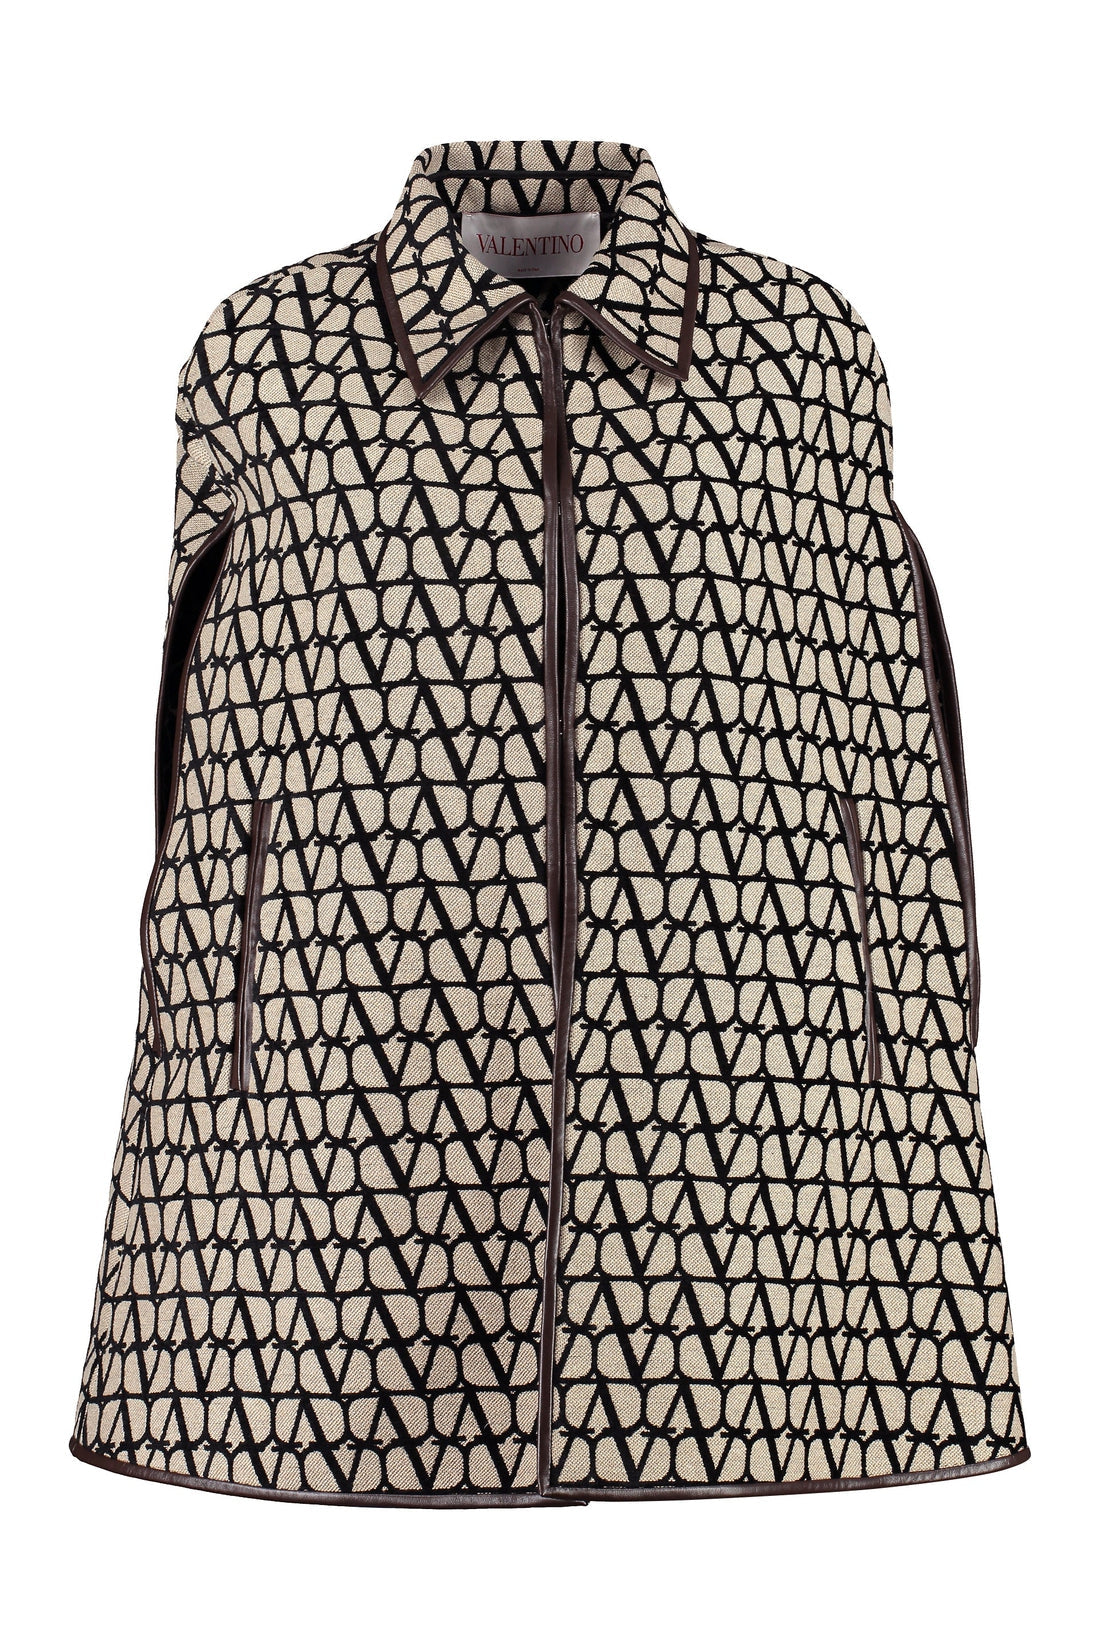 Valentino-OUTLET-SALE-Wool cape coat-ARCHIVIST